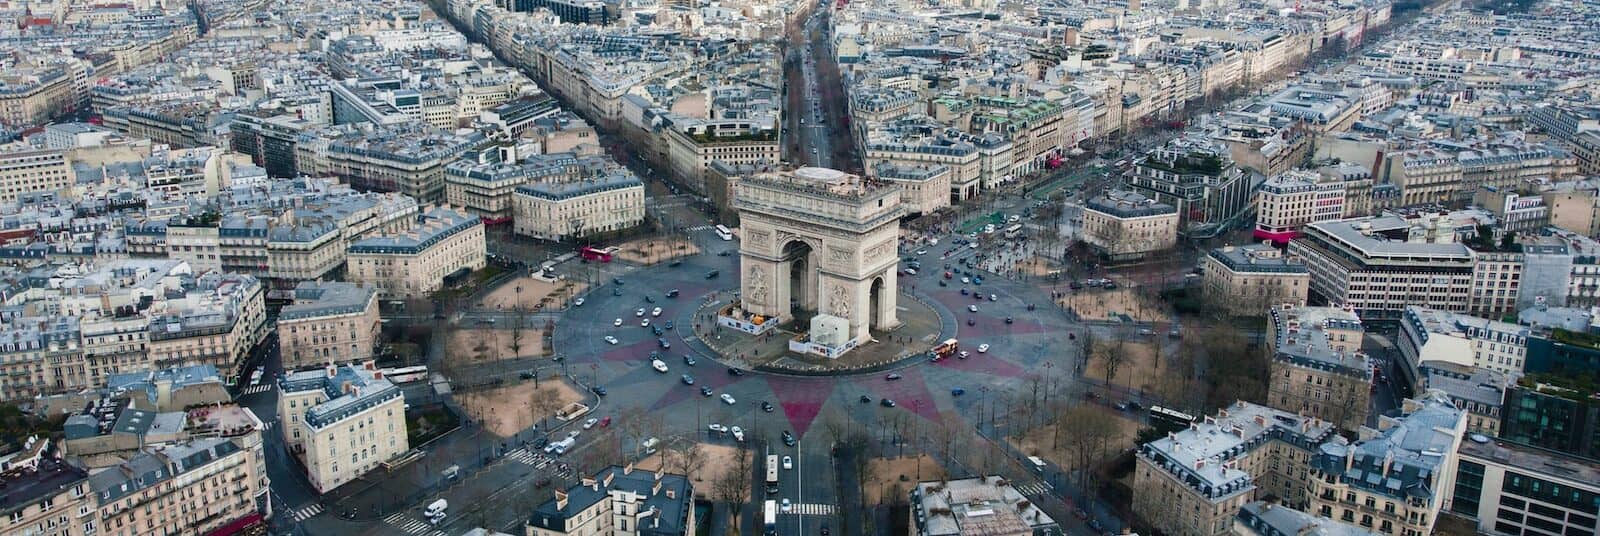 aerial view photography of Arc de Triomphe in Paris